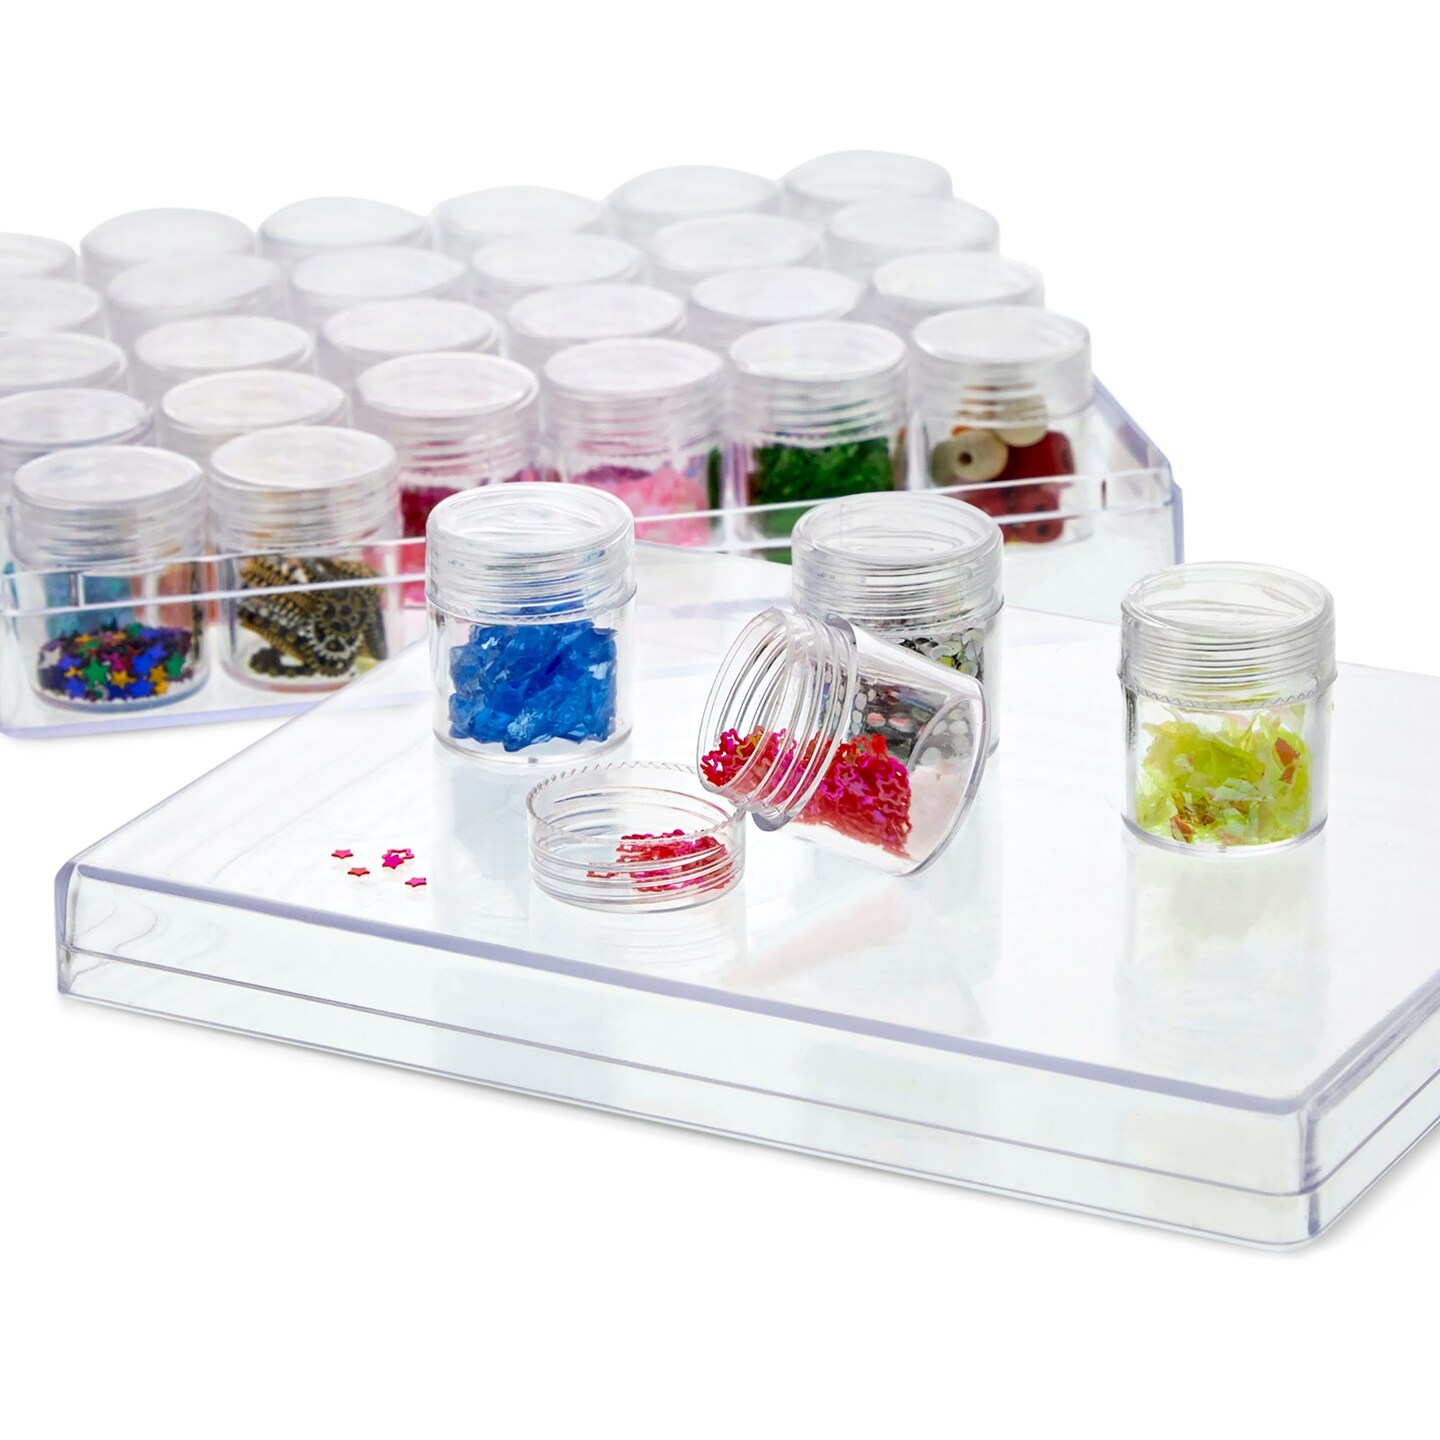 Plastic Organizer Boxes for Beads, Rhinestones, Jewelry Making